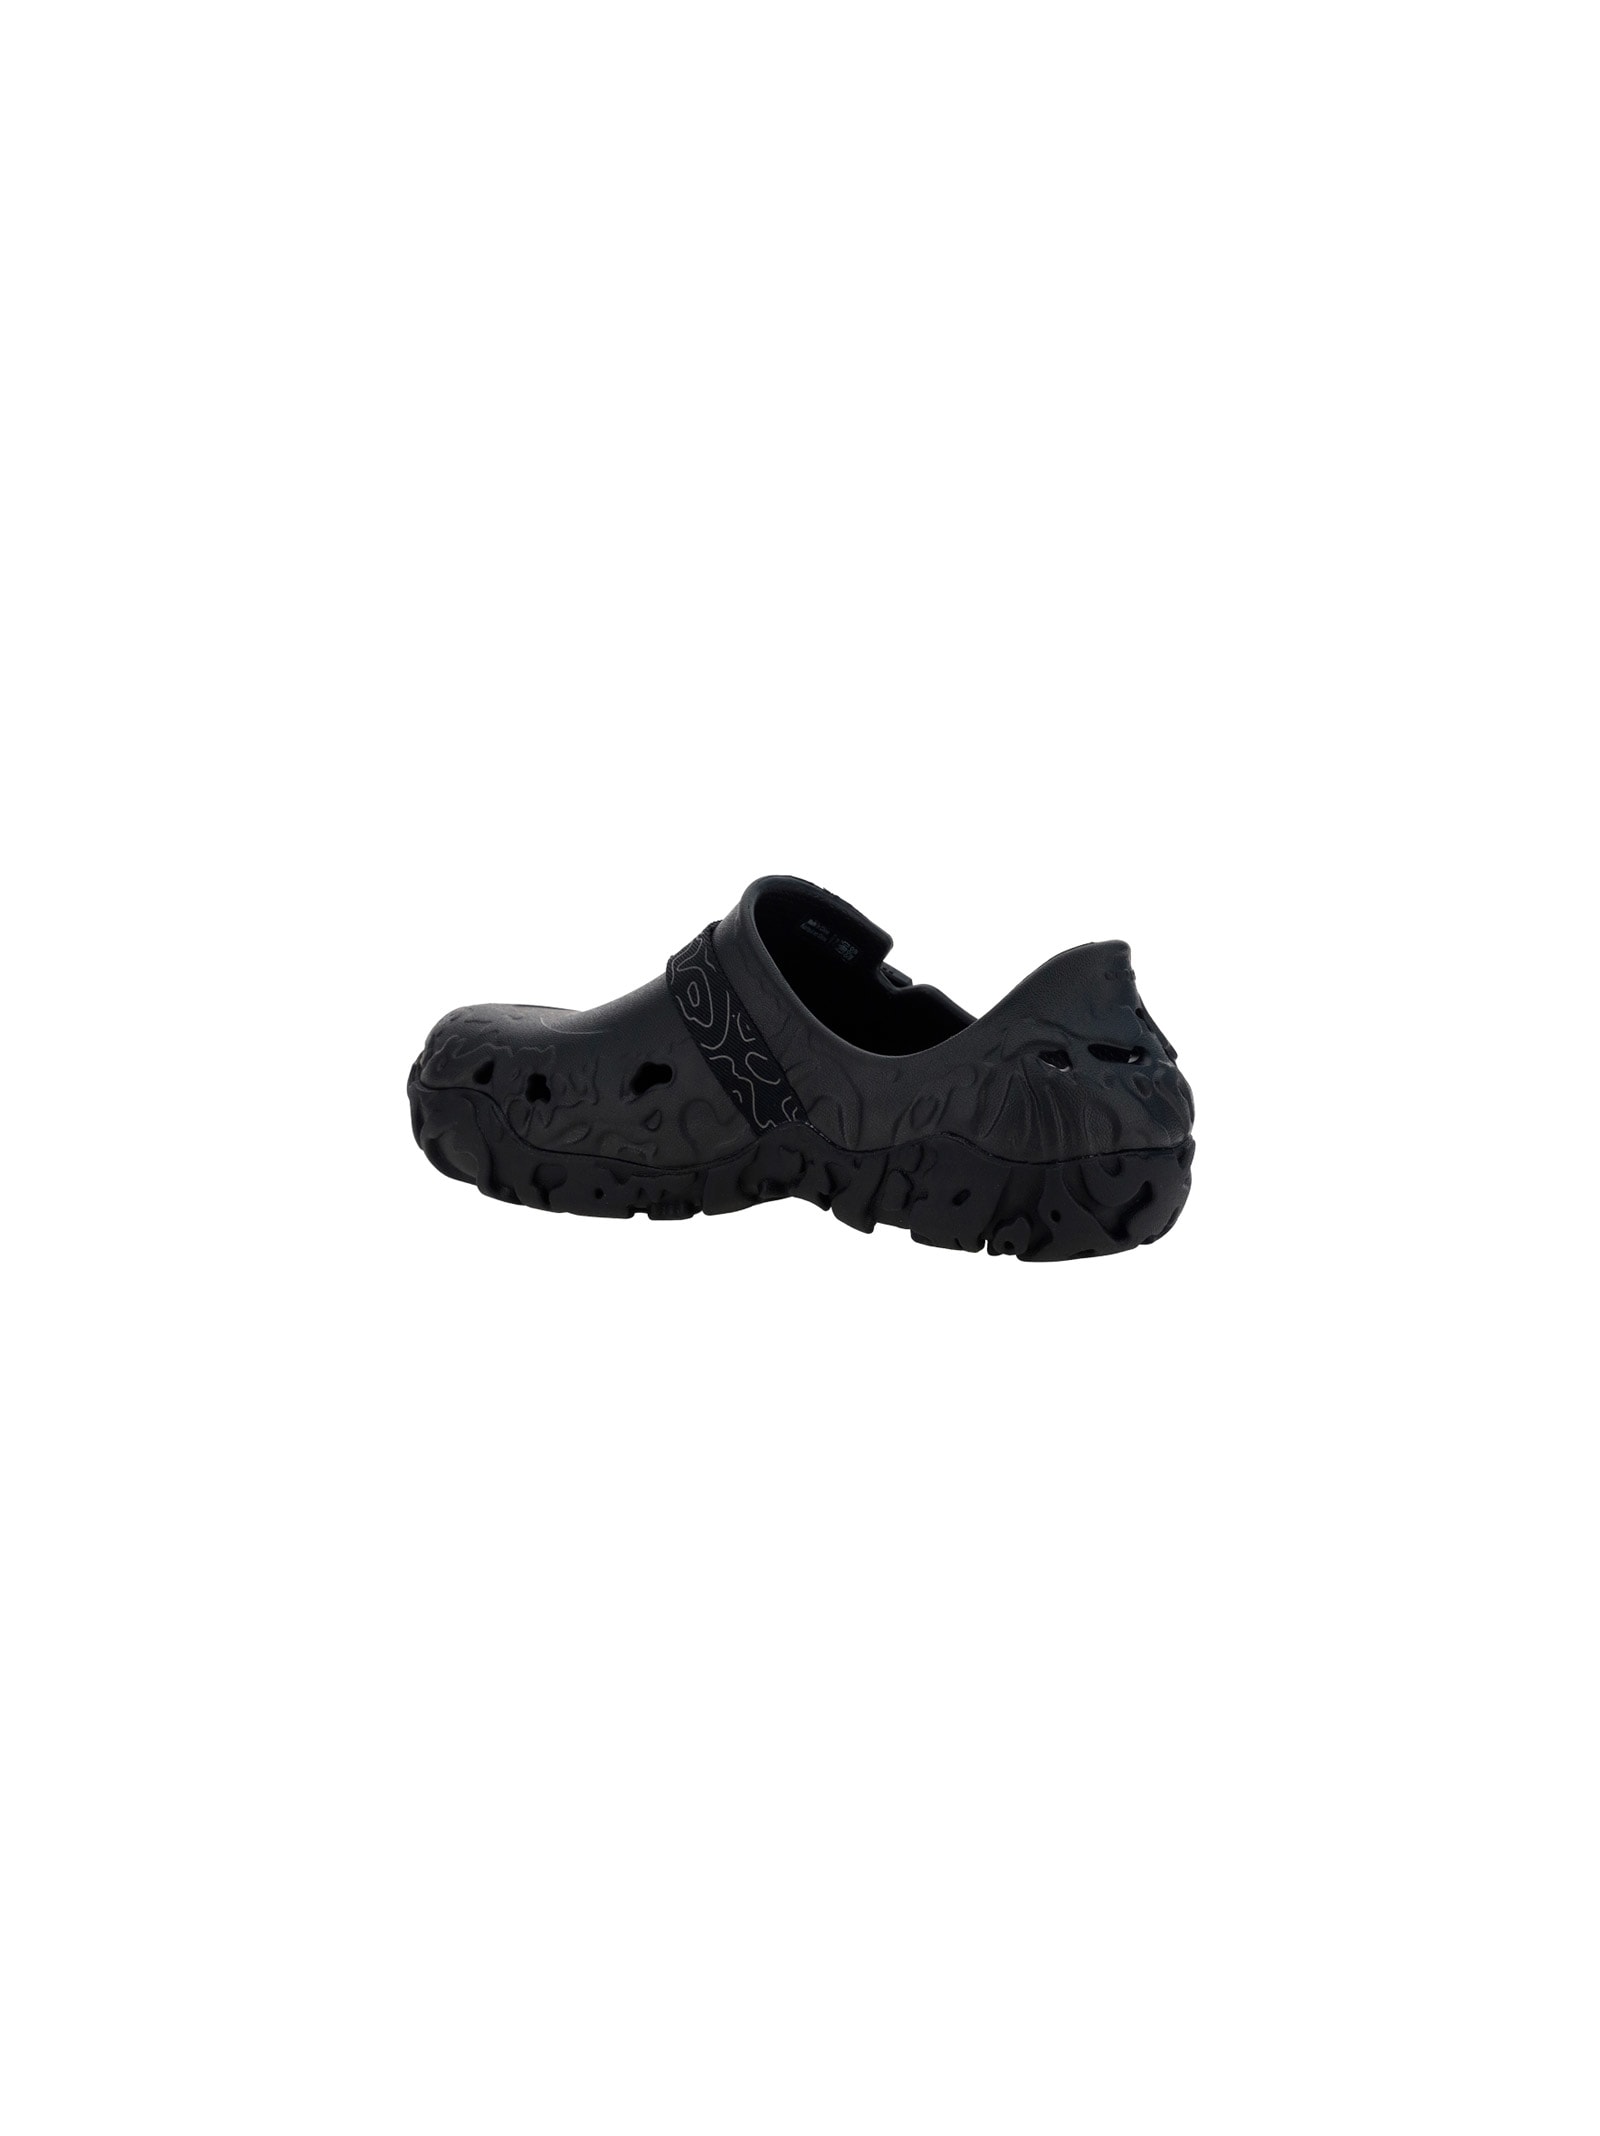 Shop Crocs All Terrain Sandals In Black